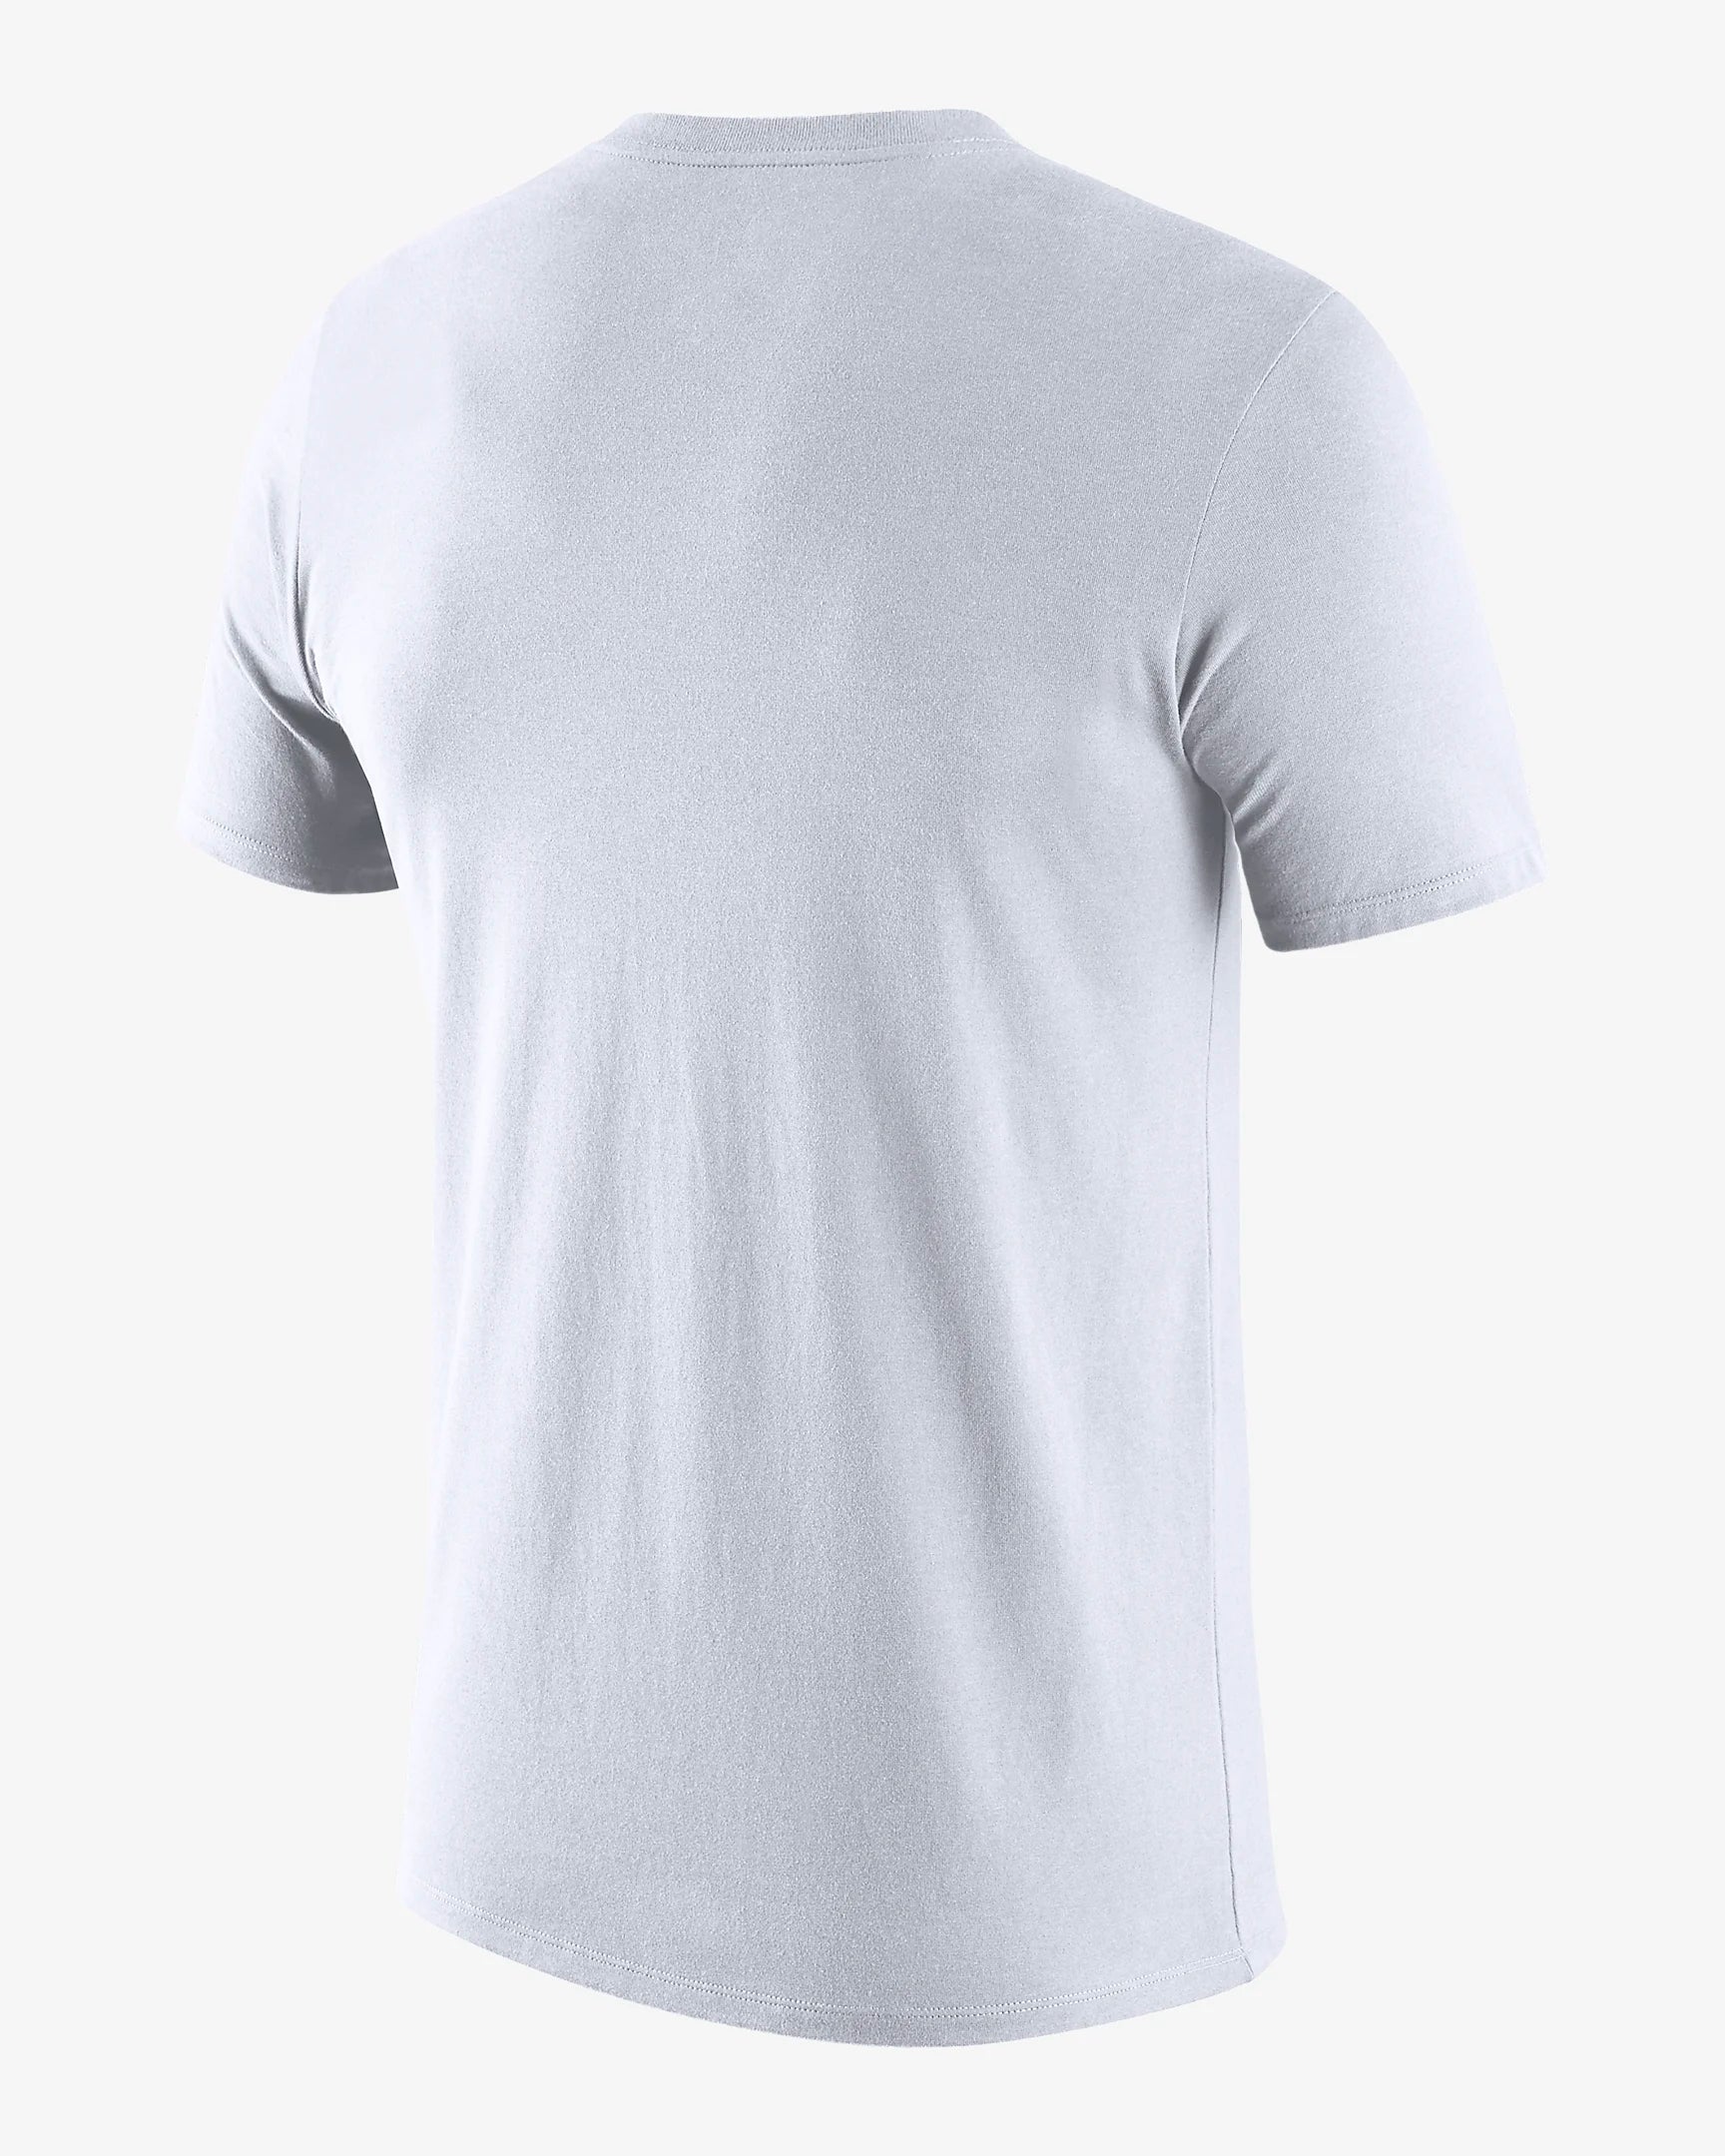 Nike Men's Orlando Magic Grey Practice T-Shirt, Small, Gray